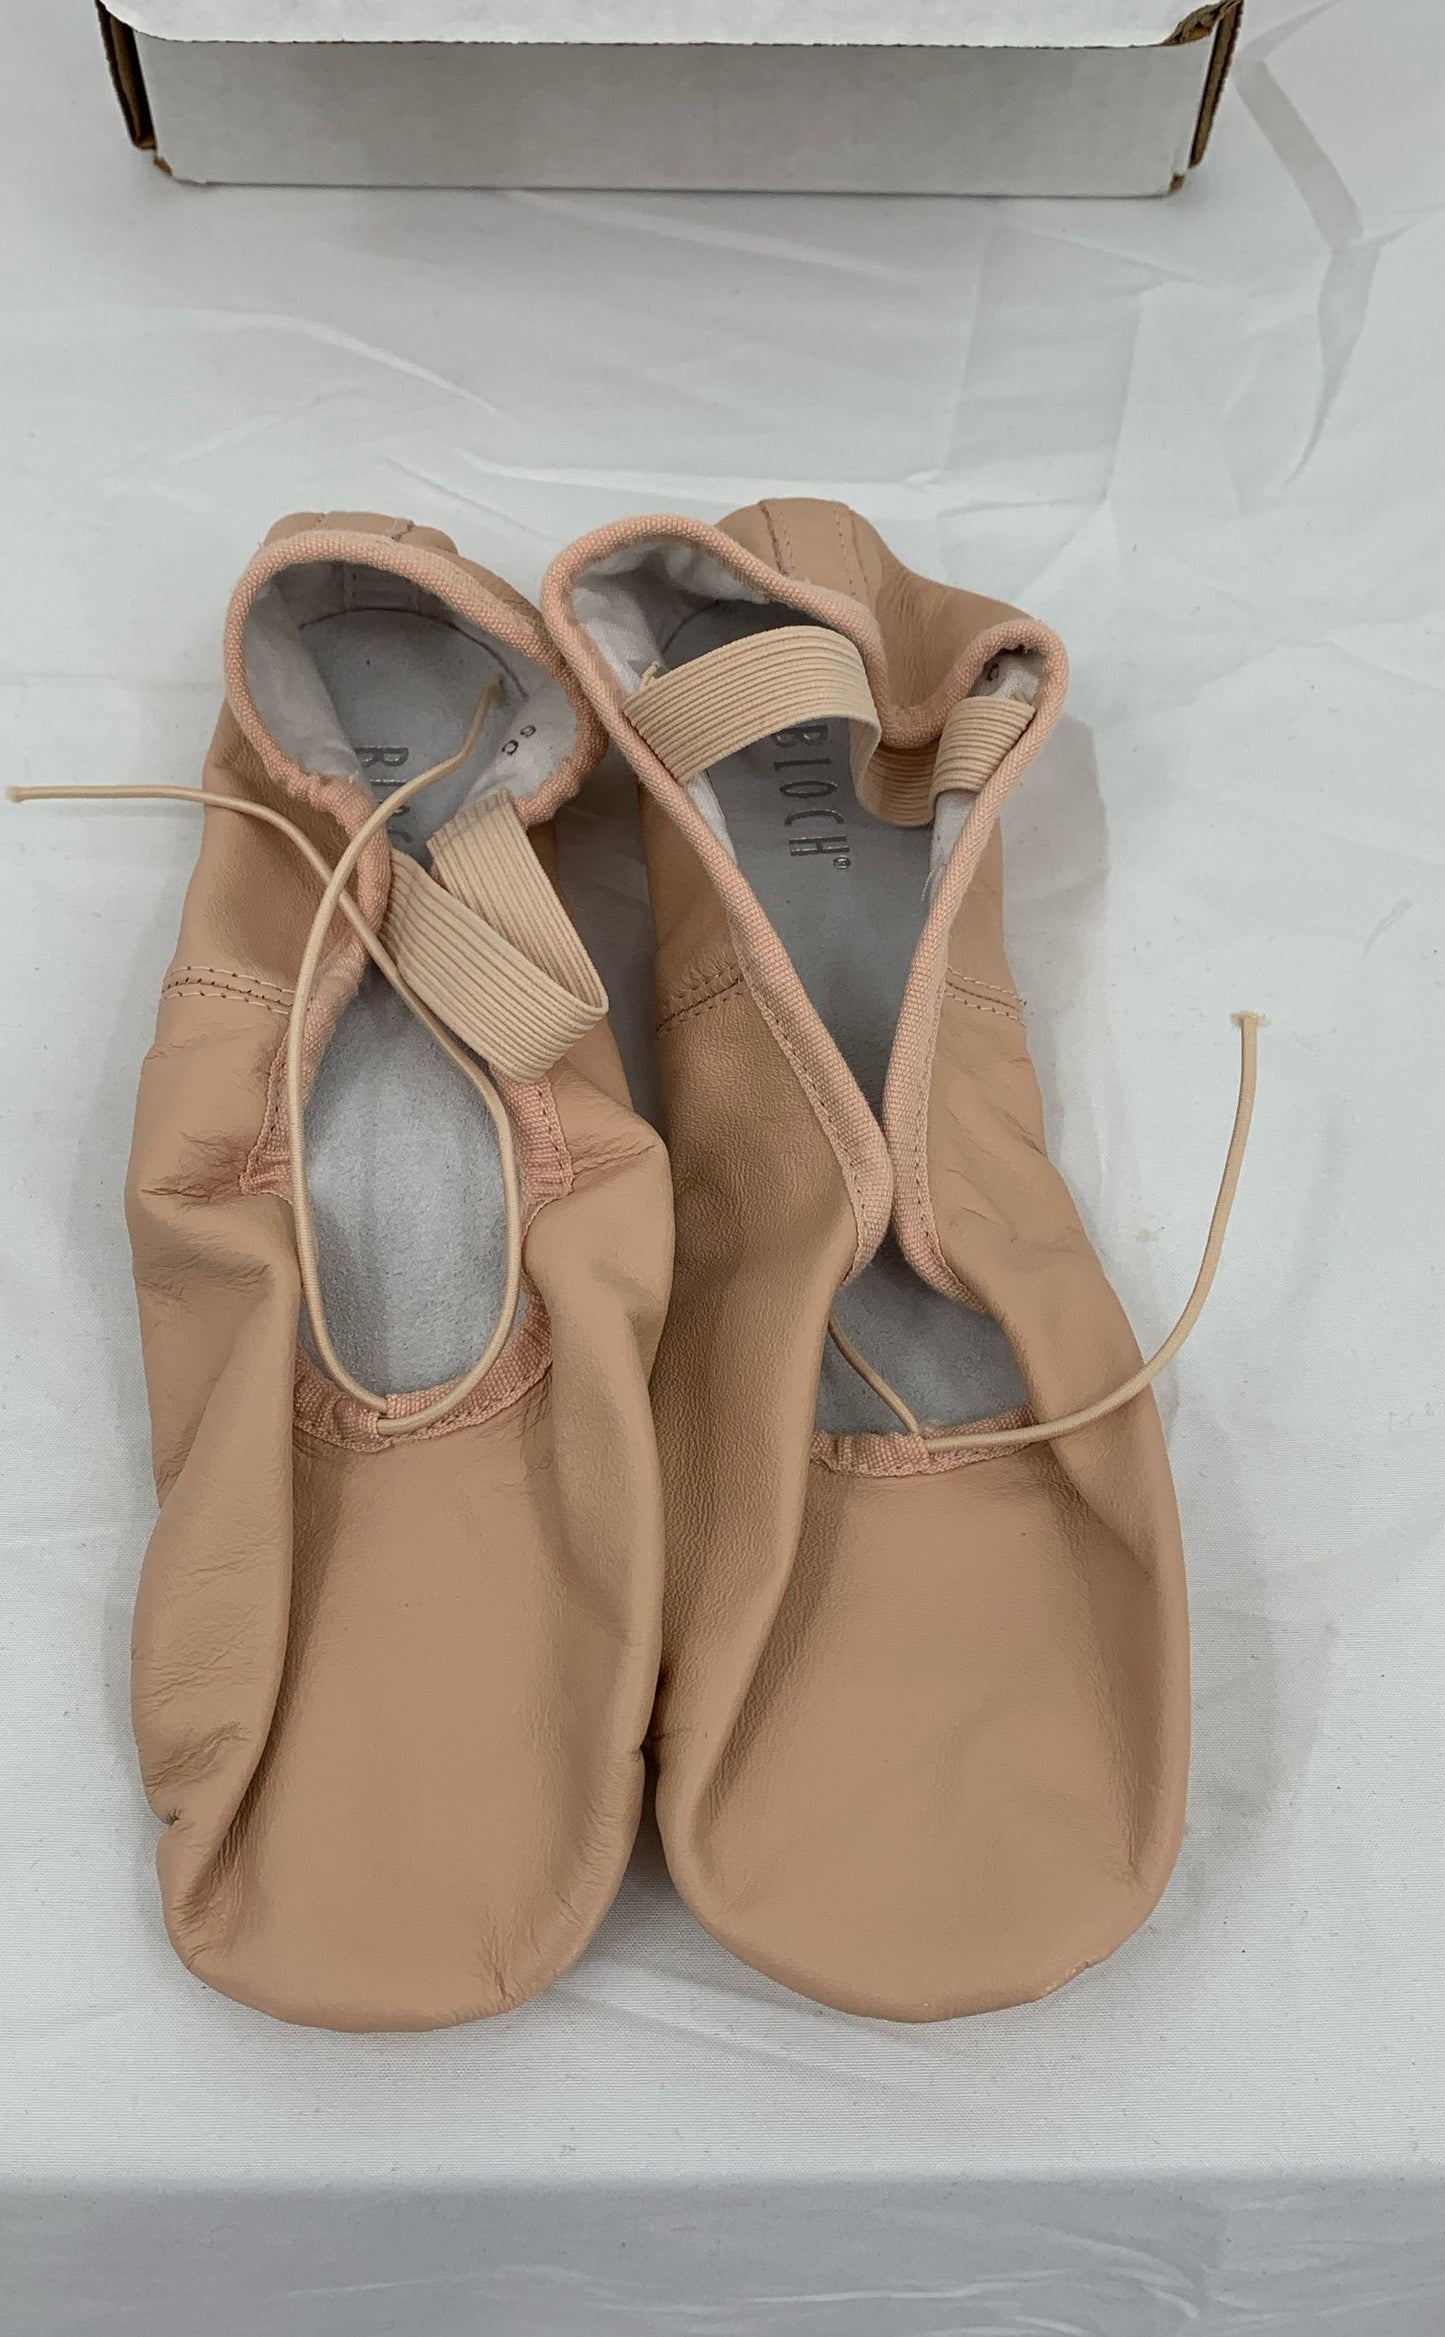 New Bloch Girl's Full Sole Leather Ballet Slipper/Shoe-Size 6C